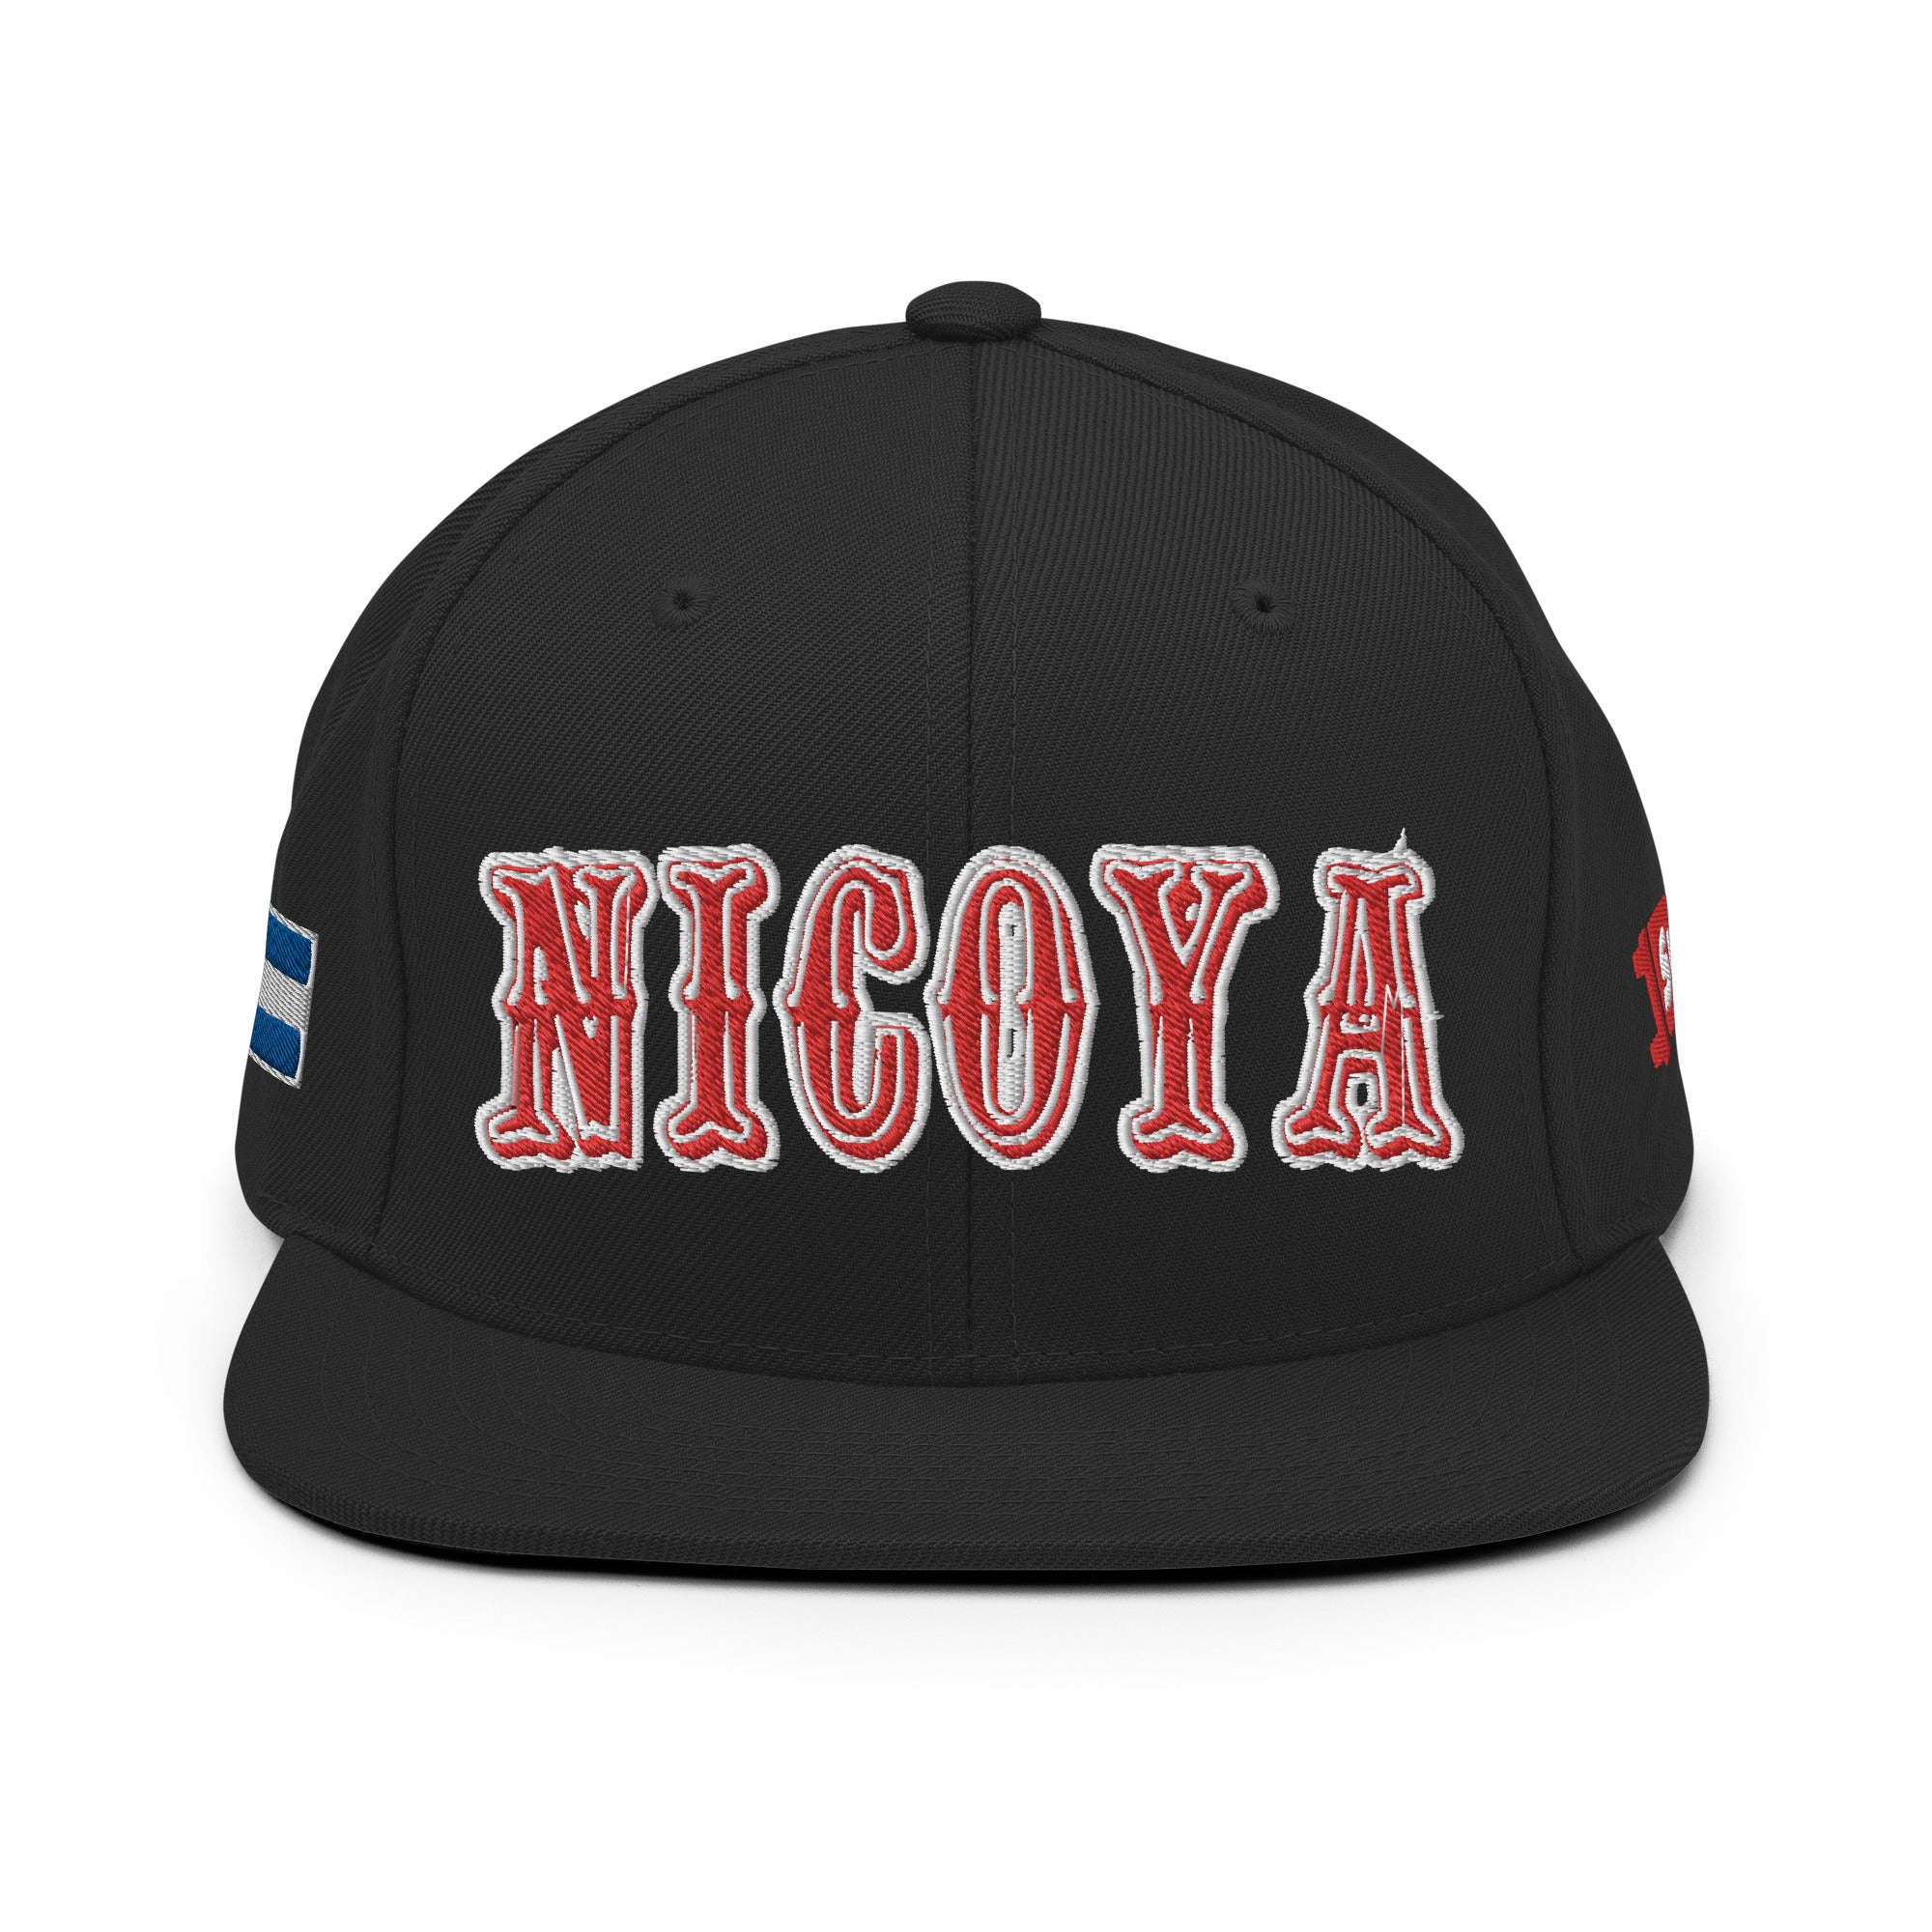 Nicoya Niner | Black/Red Snapback Hat